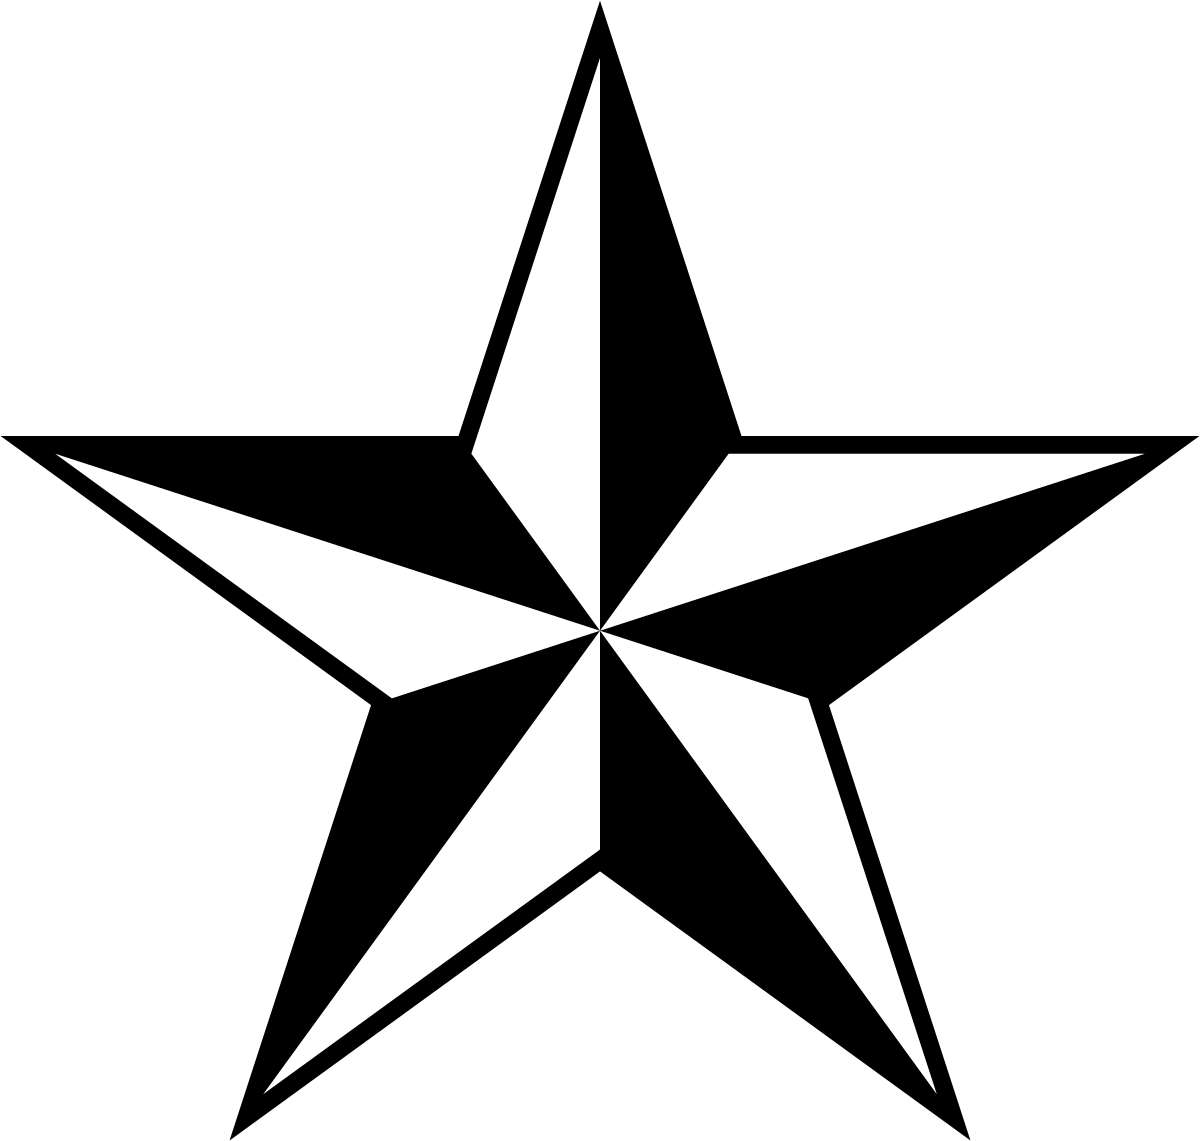 Star Black and White Logo - Nautical star